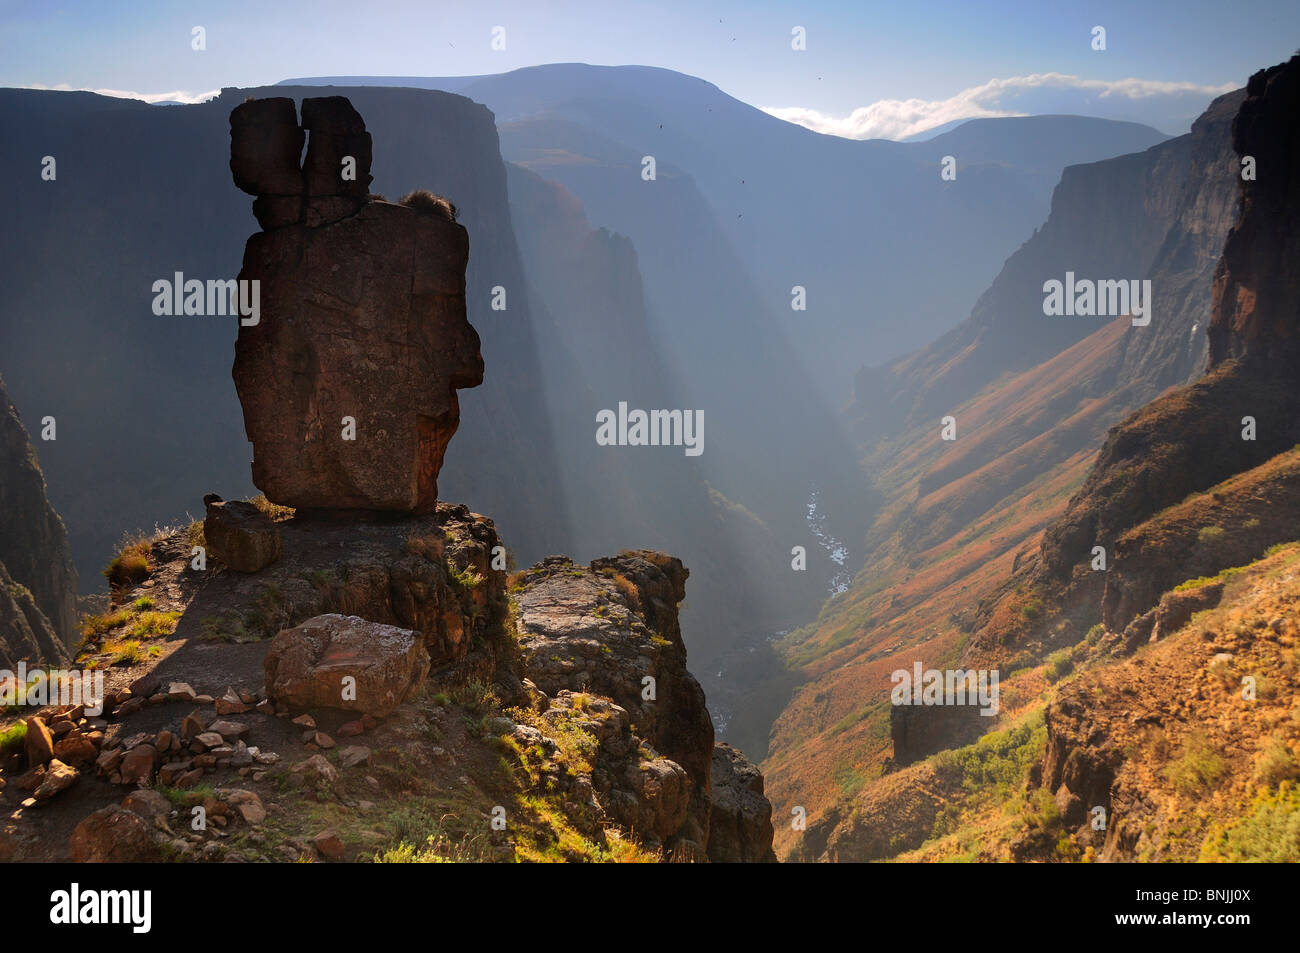 near Semonkong Lesotho Southern Africa canyon mountain mountains landscape scenery nature rocks rock Stock Photo